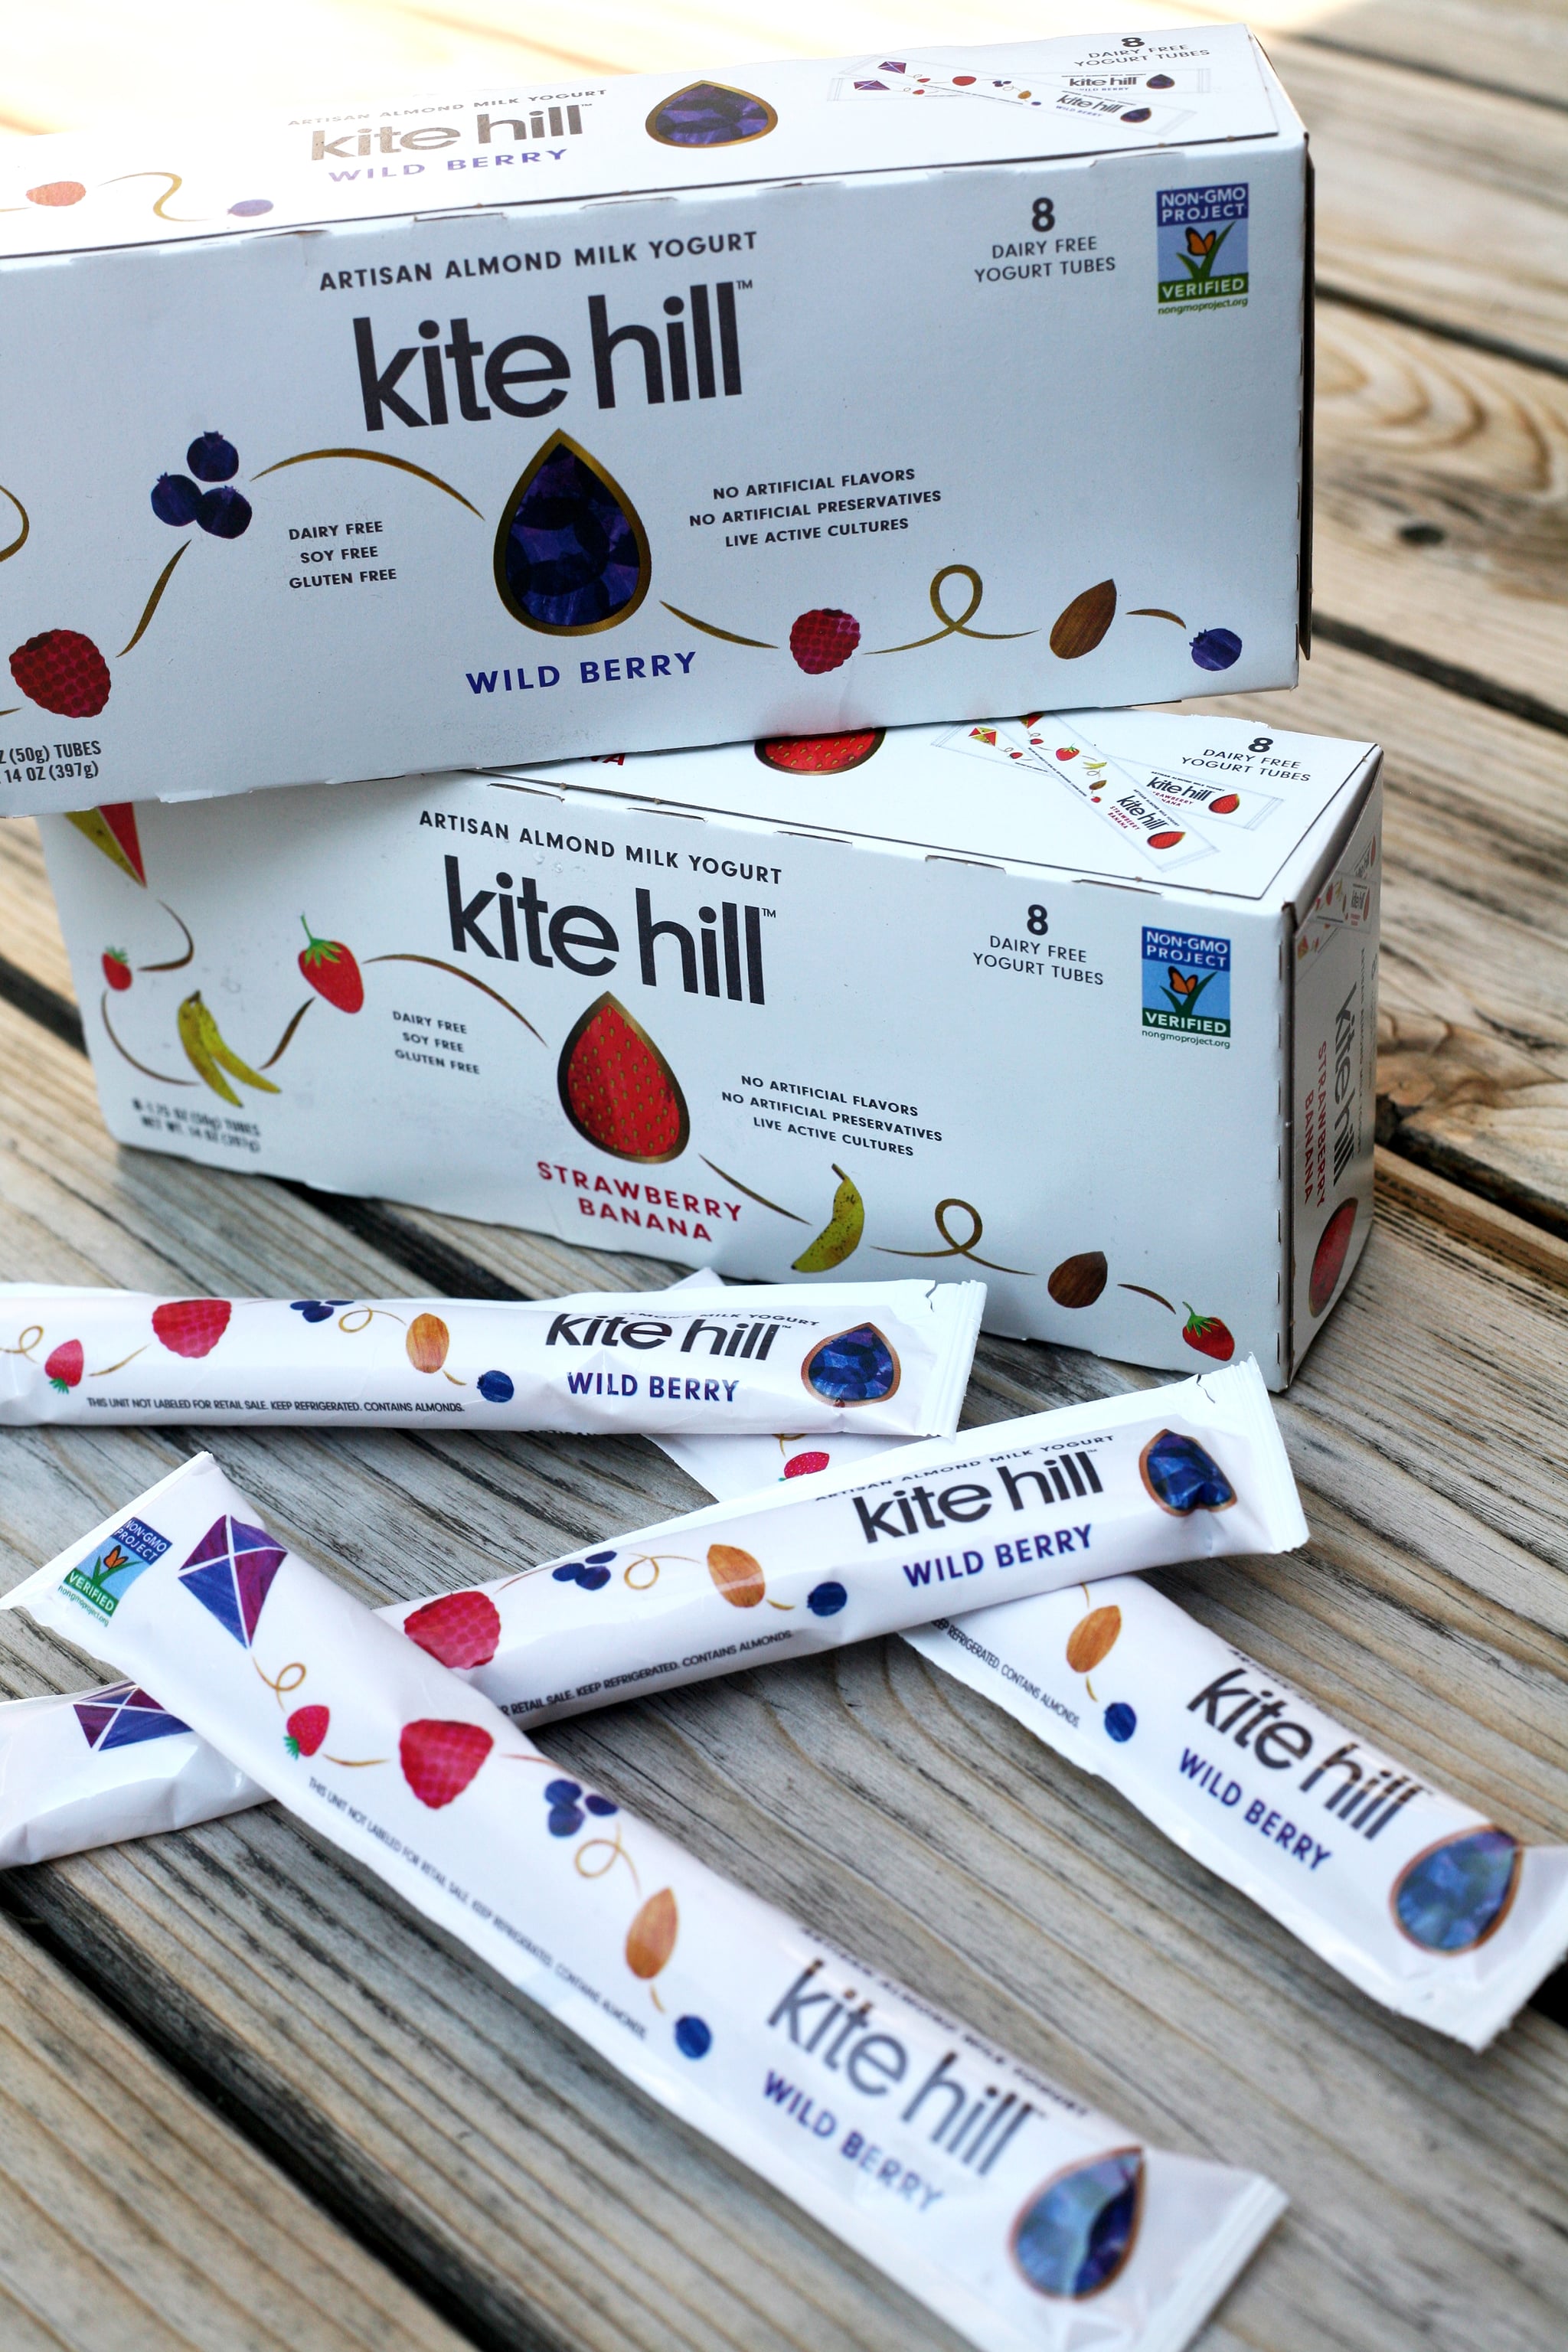 kite hill yogurt amazon